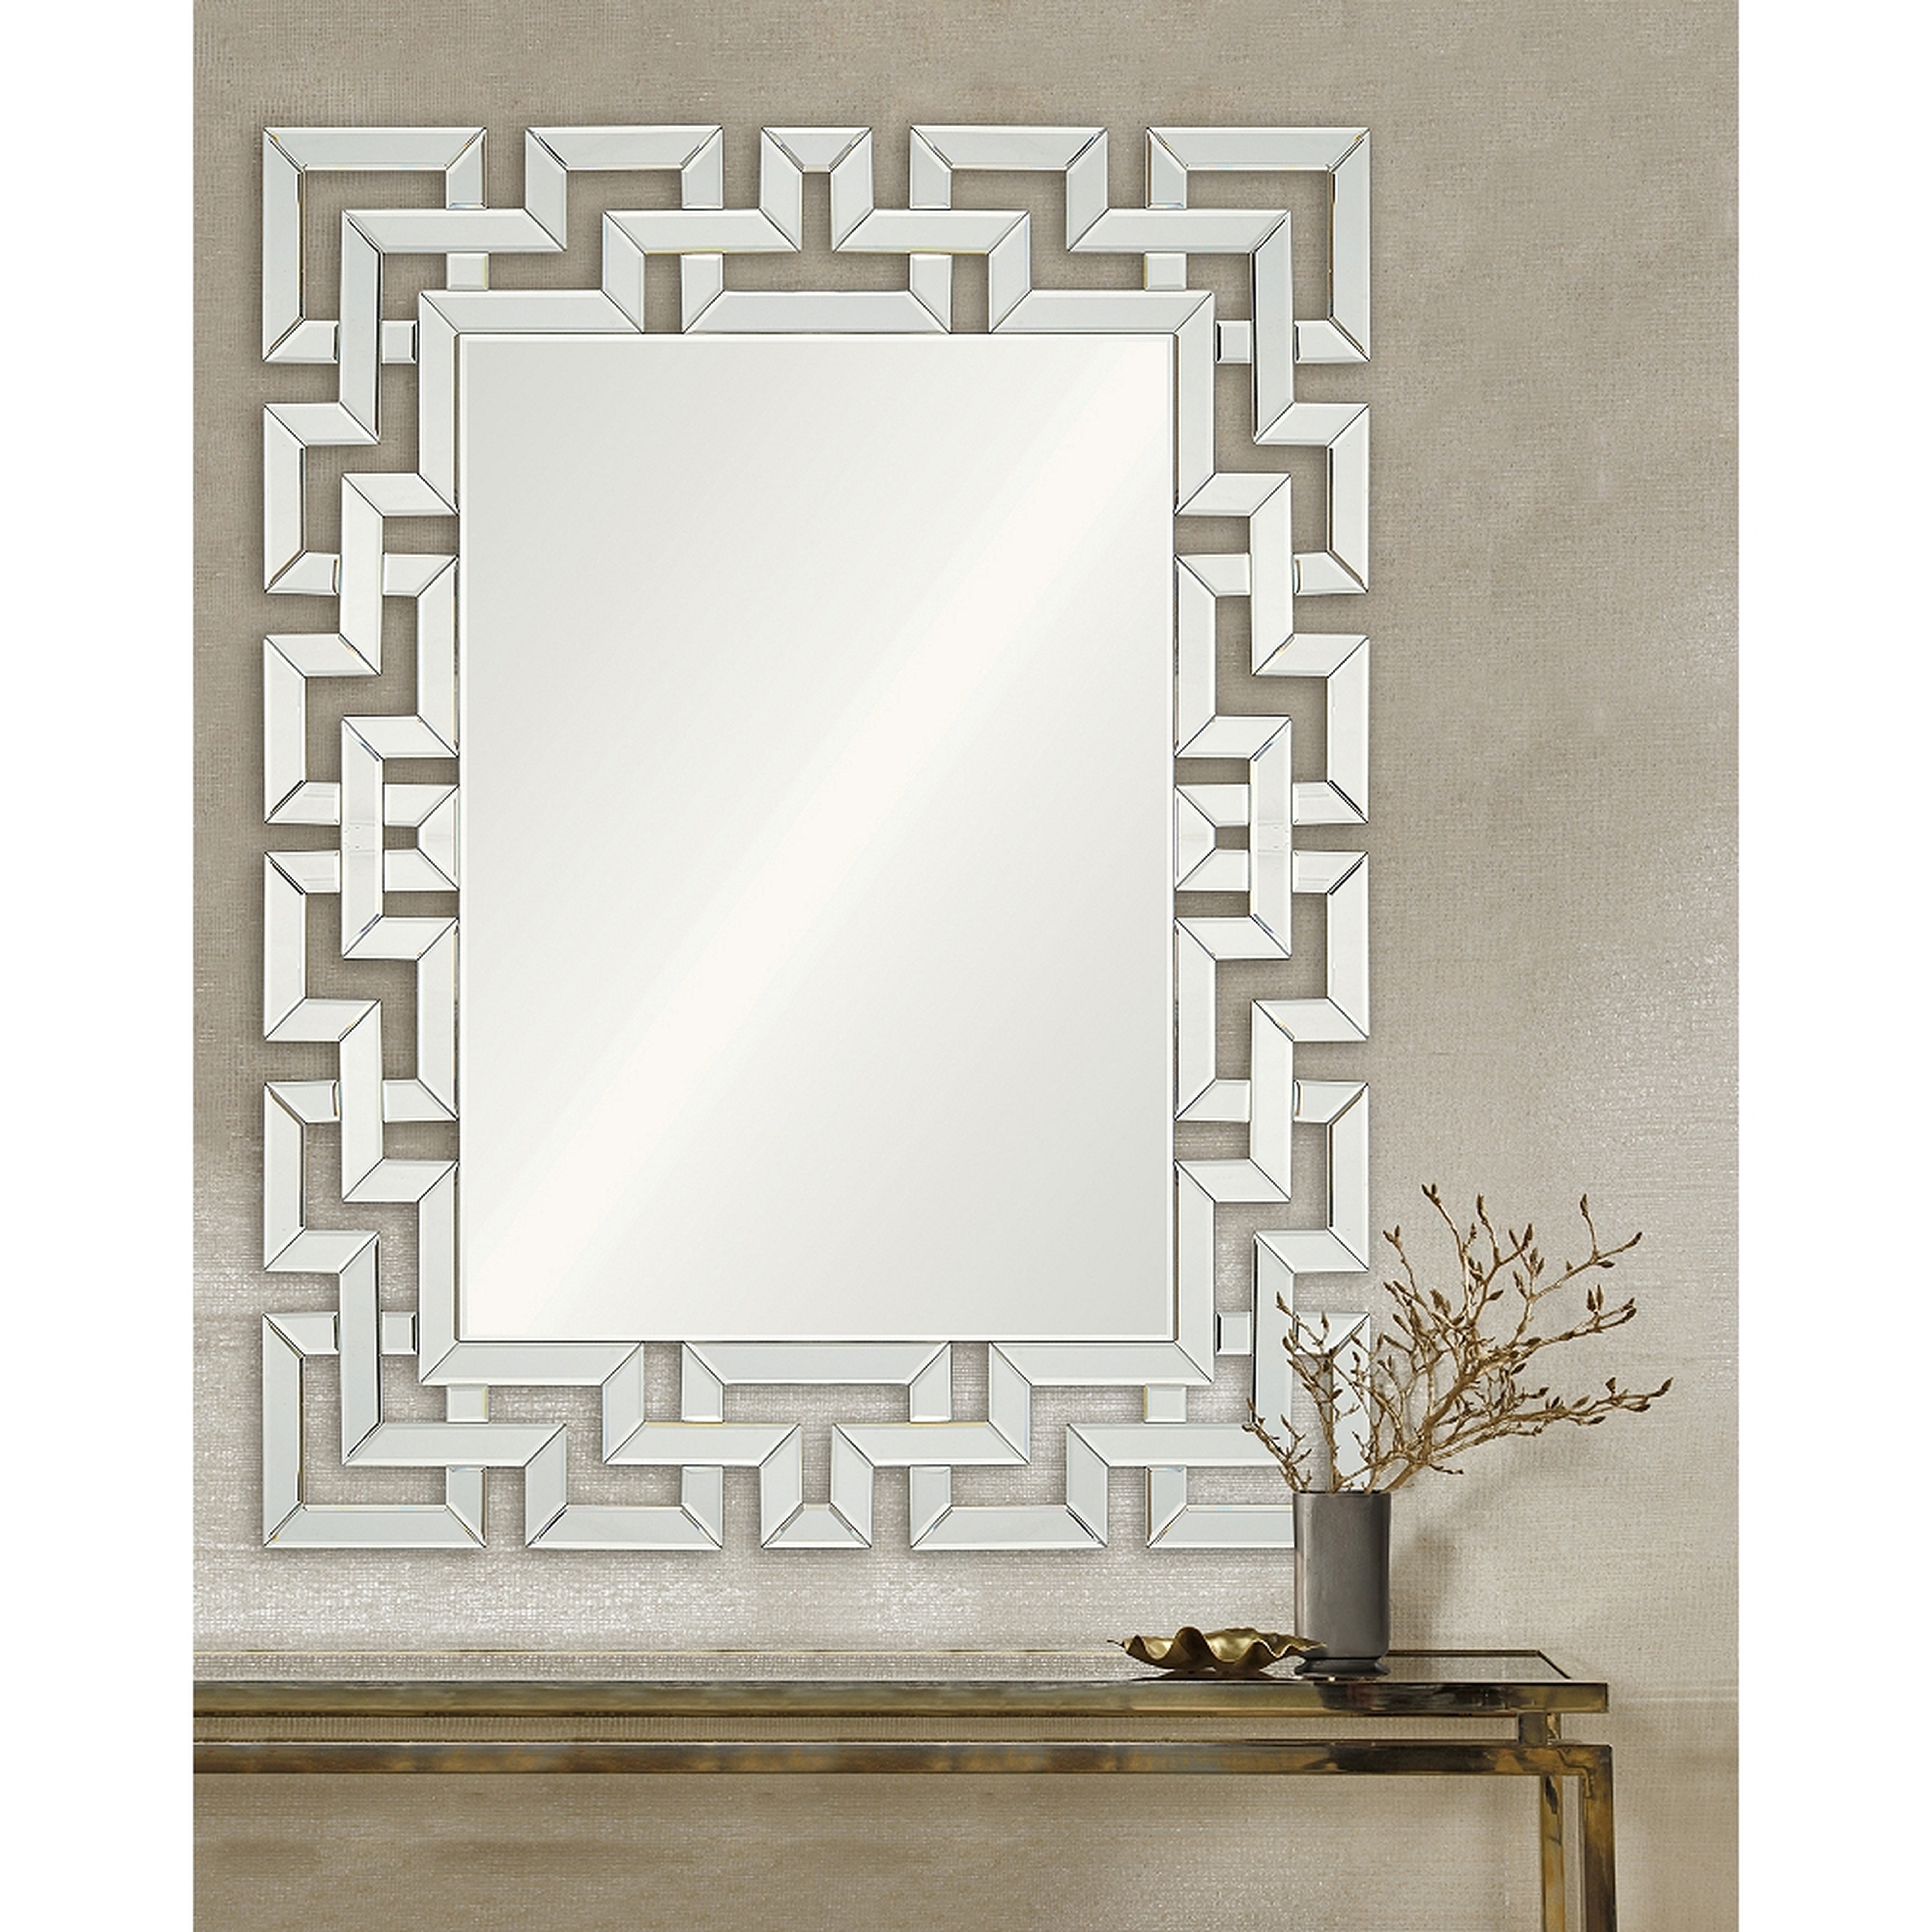 Garance Intricate 39" x 48" Rectangular Wall Mirror - Style # 78C44 - Lamps Plus